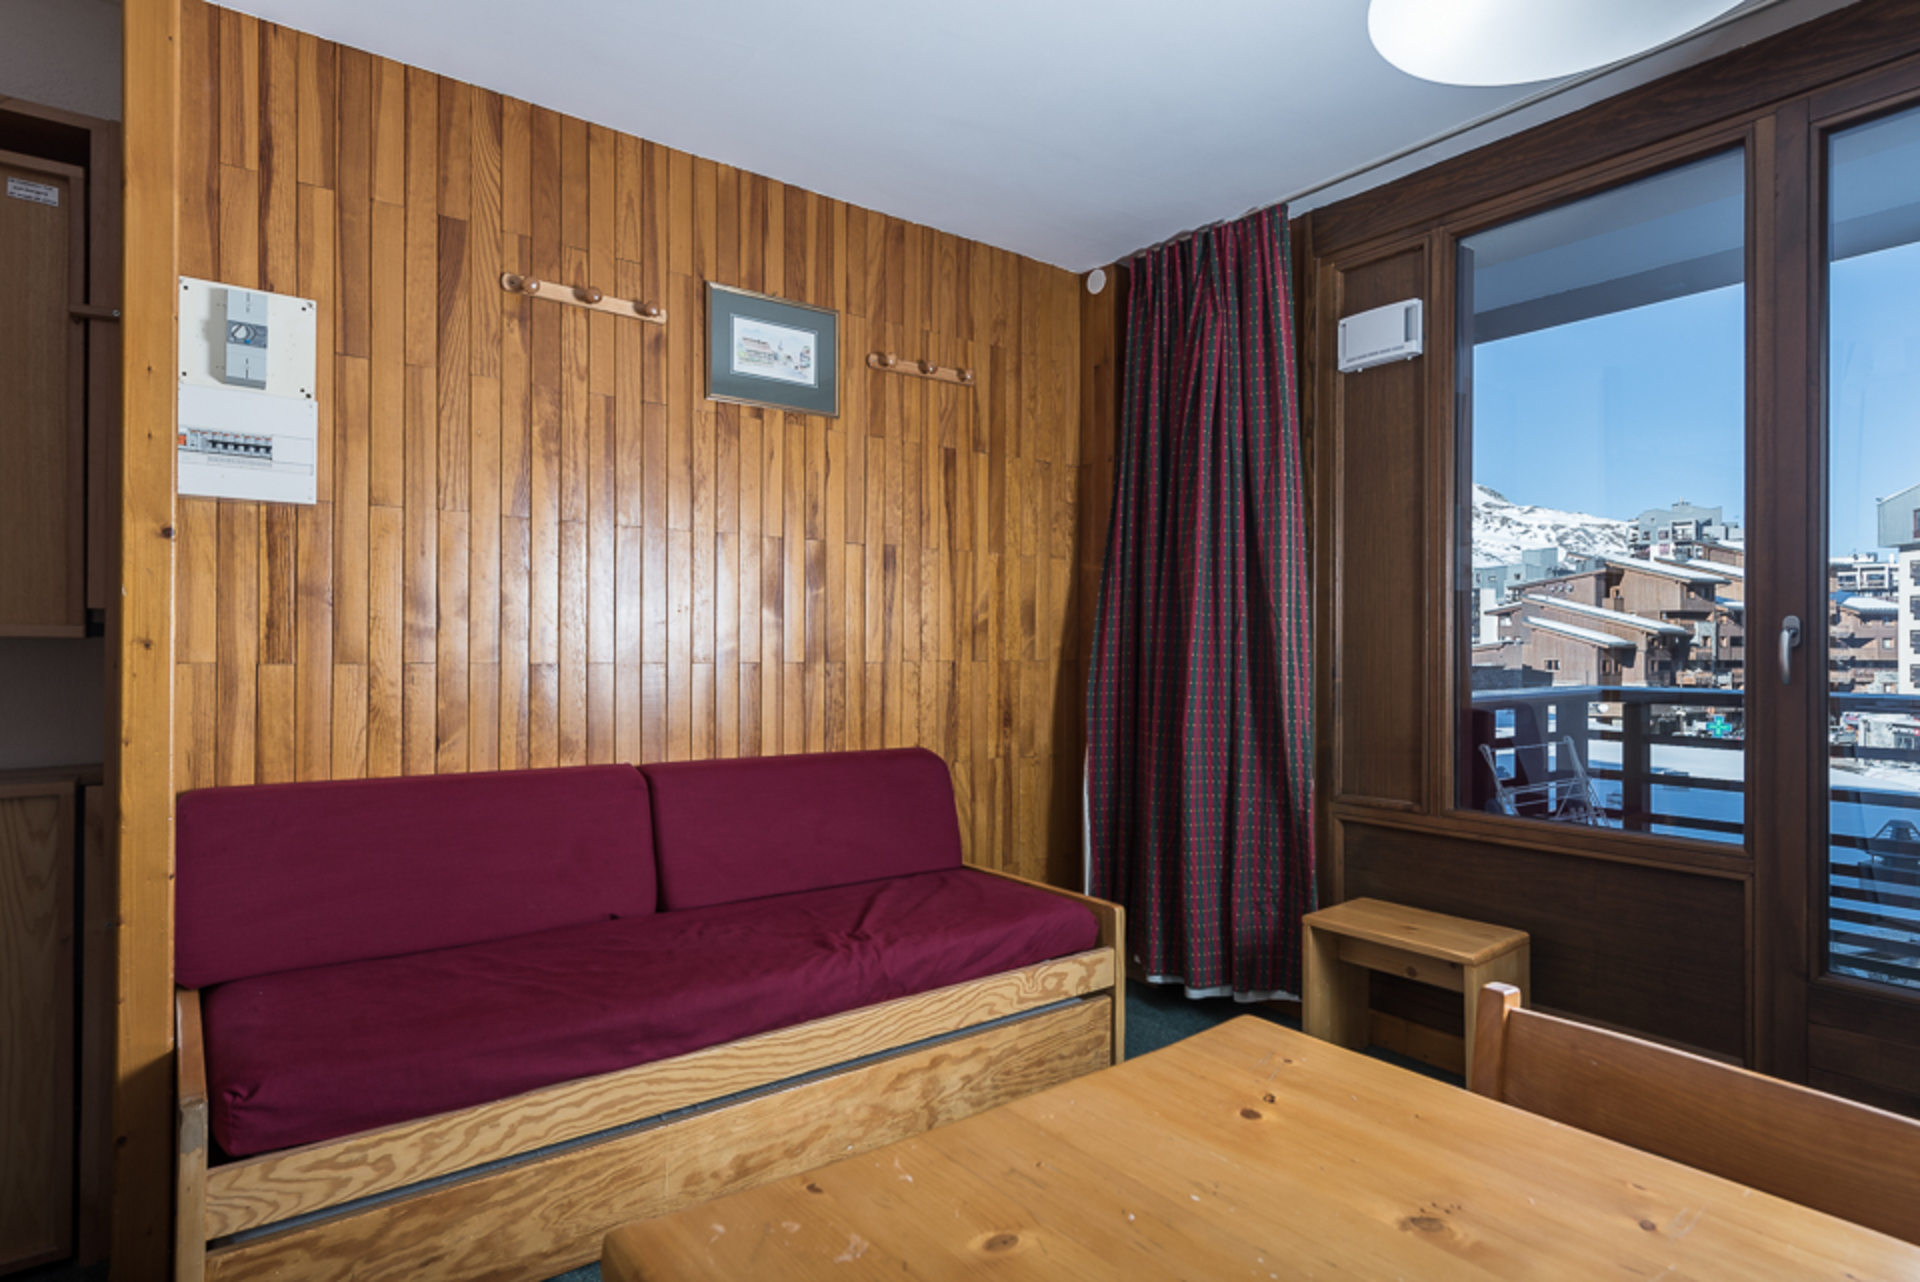 Studio 4 people - travelski home choice - Apartements CURLING B3 - Tignes Val Claret